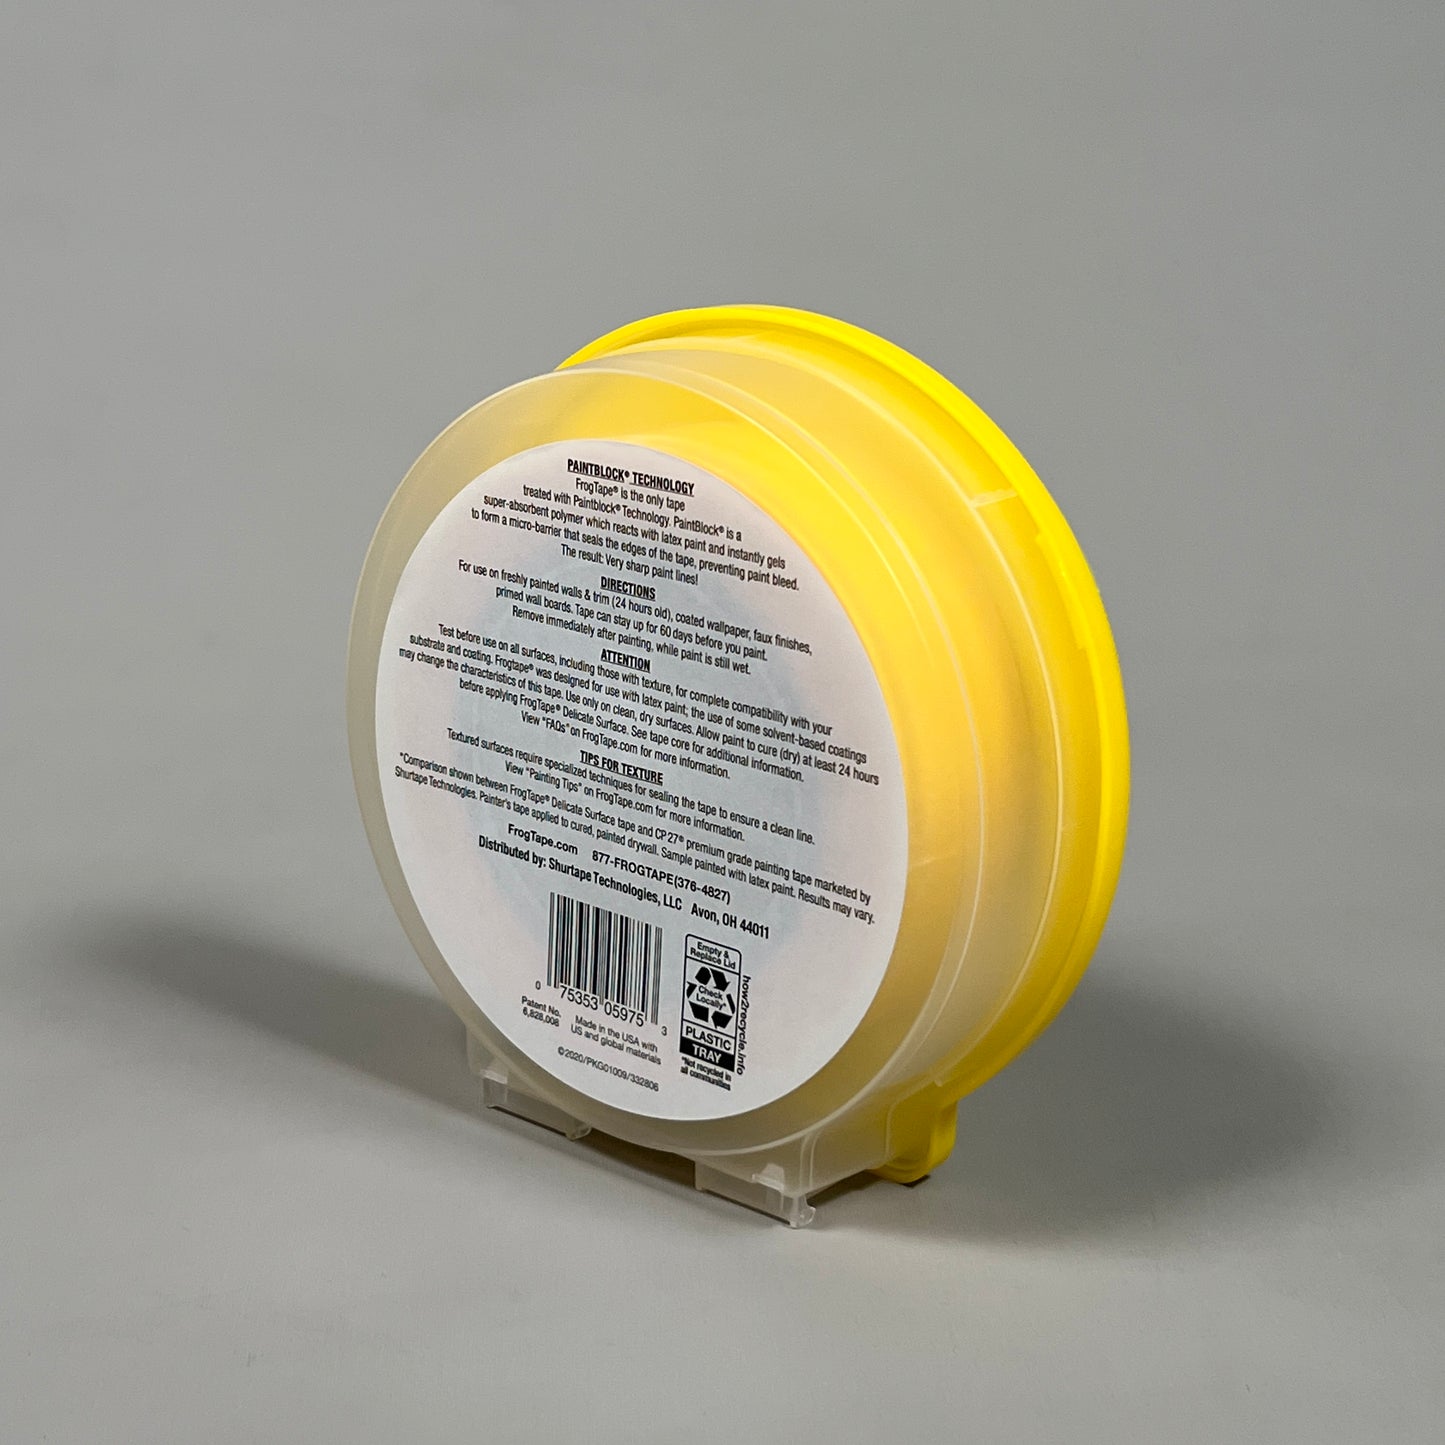 2-PK SHURTAPE FROGTAPE Multi-Surface Masking Tape Yellow 1.41 in x 60 yd 334563 (New)